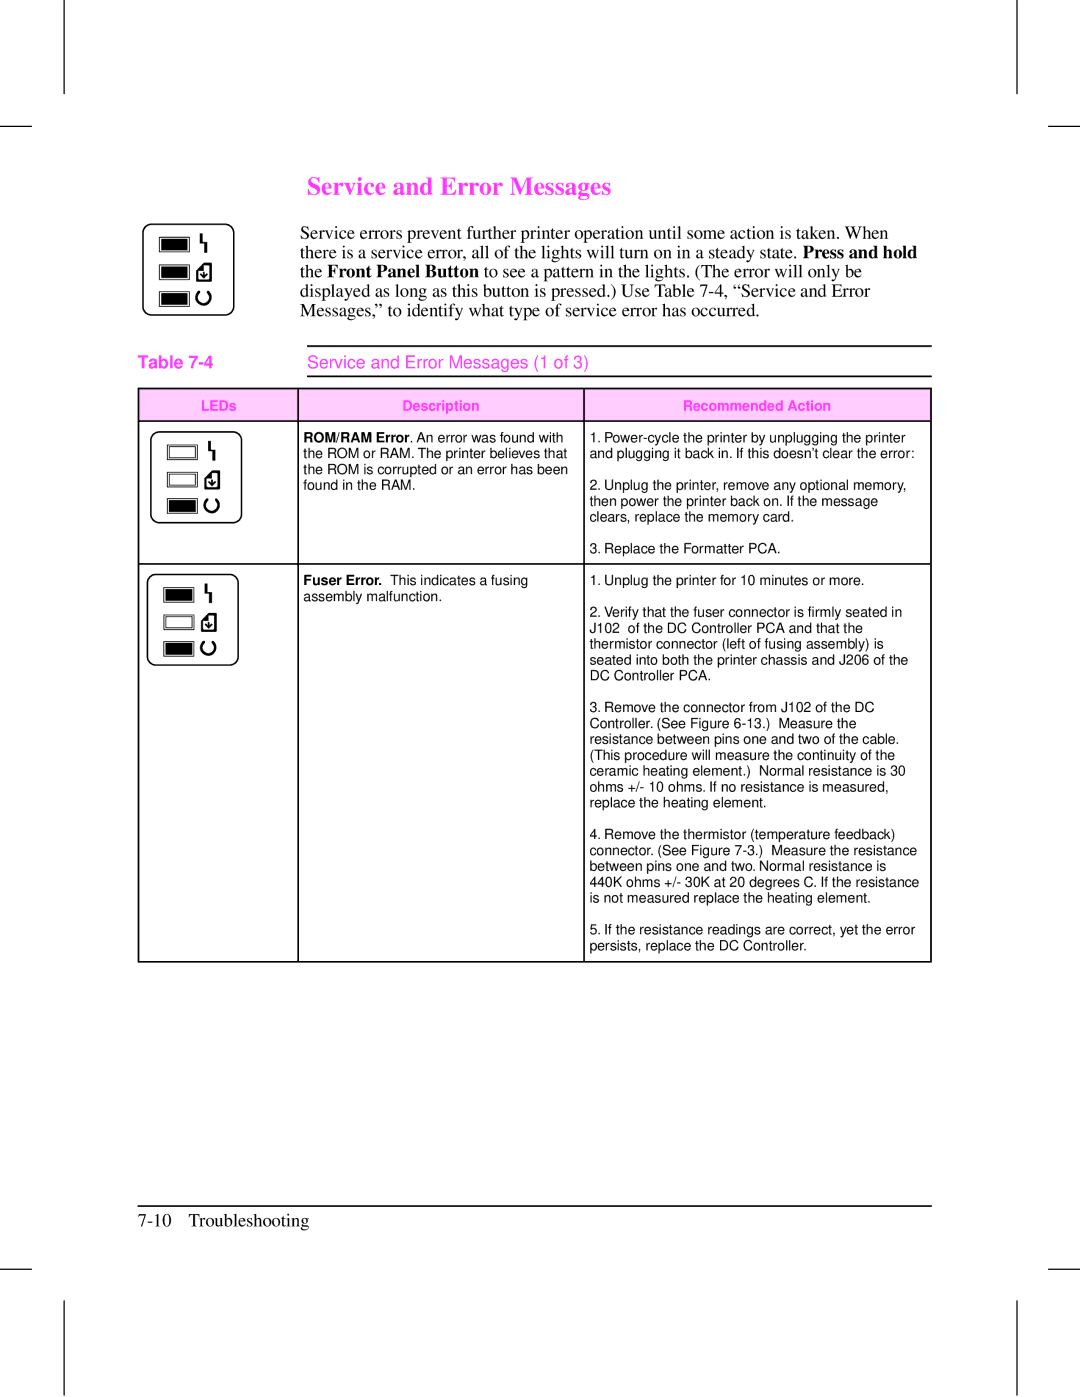 HP 5L (C3941A) manual Service and Error Messages 1 